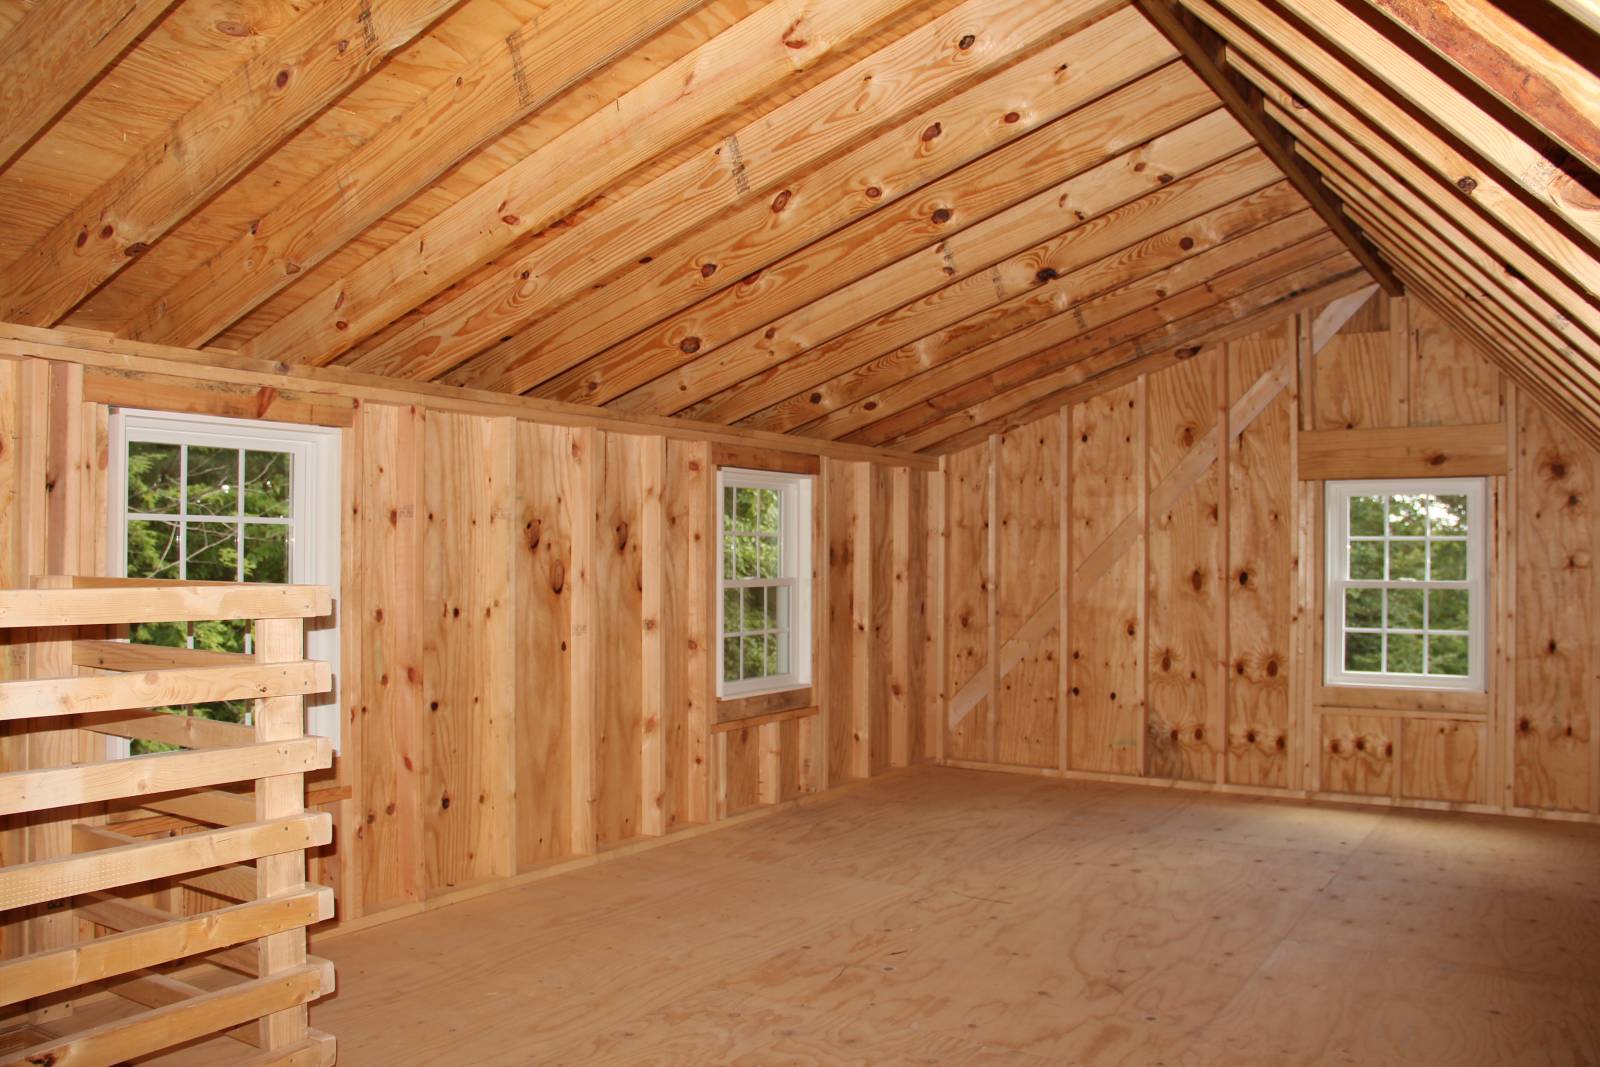 Unfinished loft with 24' full shed dormer